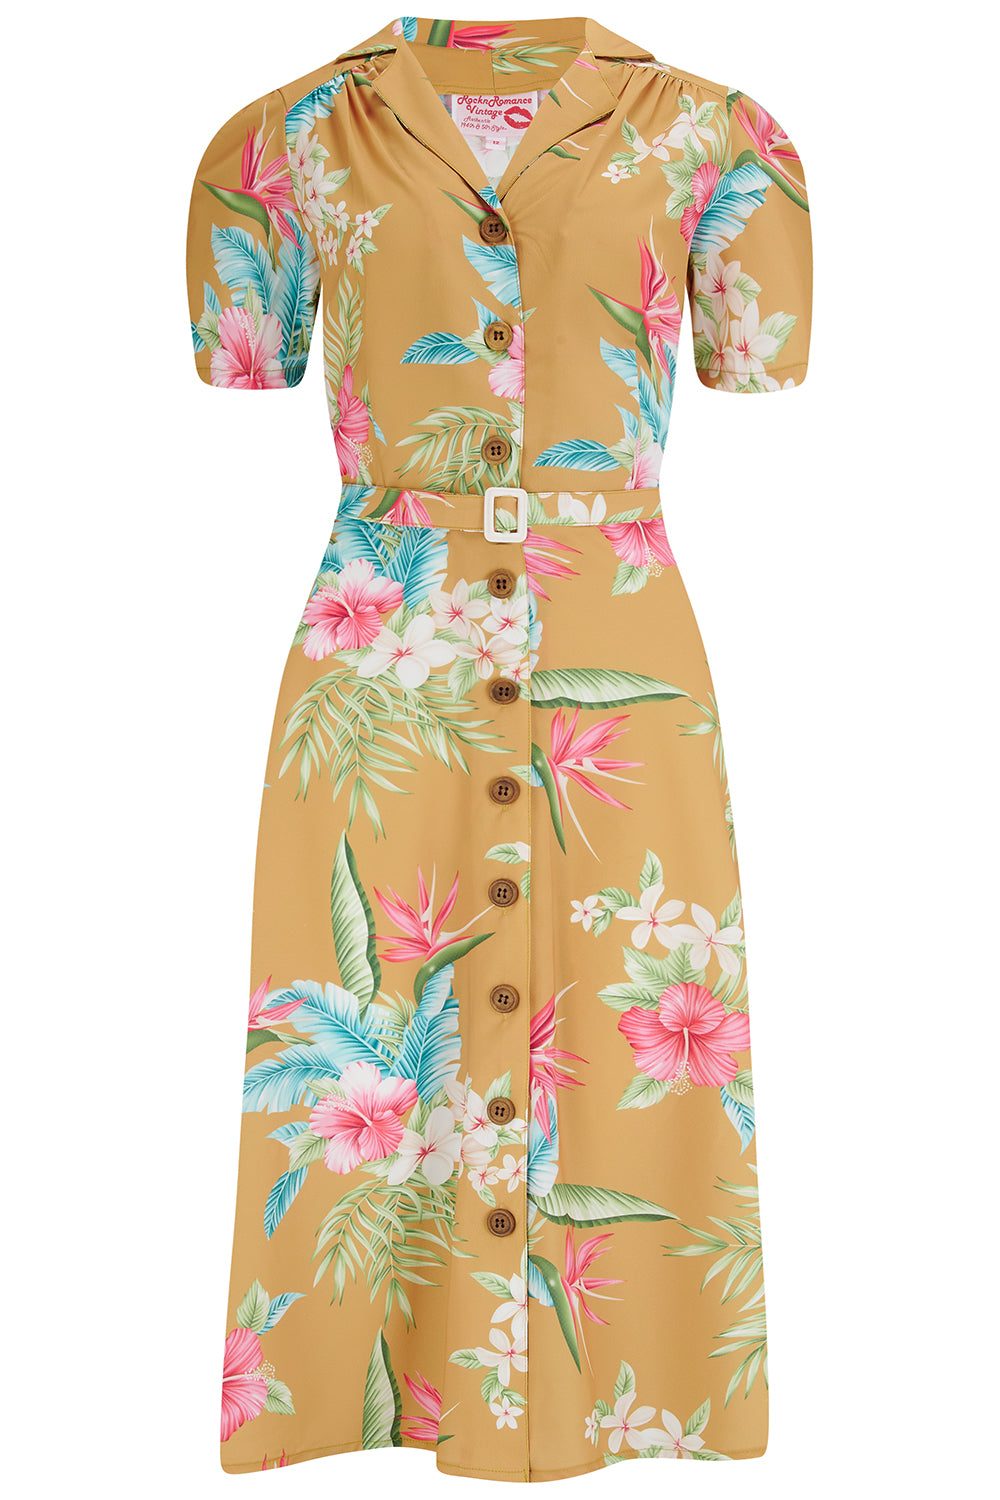 The "Charlene" Shirtwaister Dress in Mustard Honolulu Print, True & Authentic 1950s Vintage Style